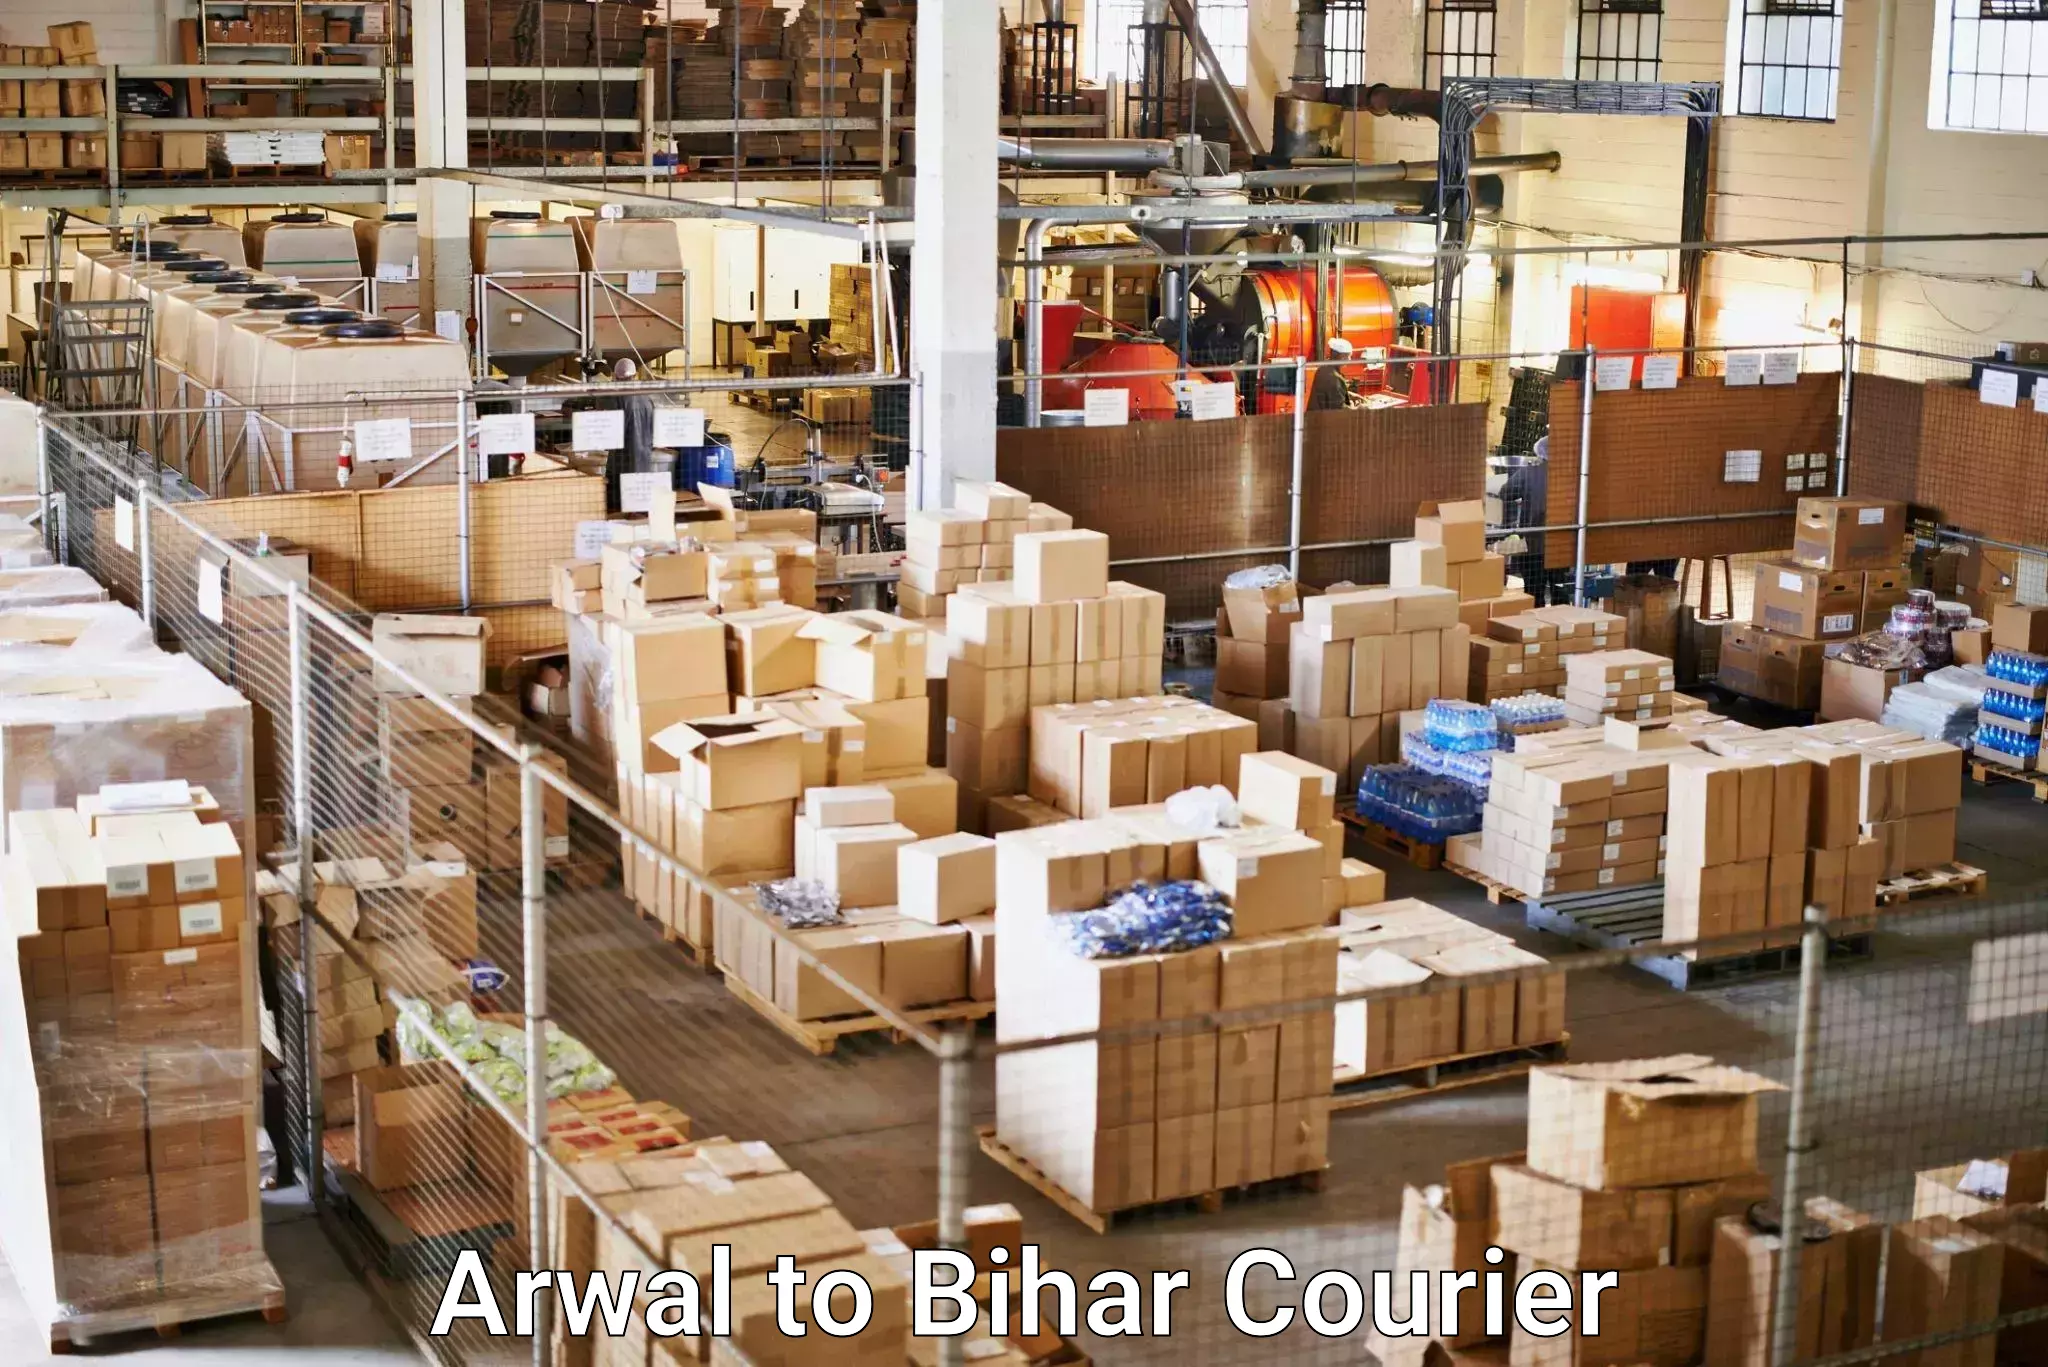 Courier service comparison Arwal to Bihar